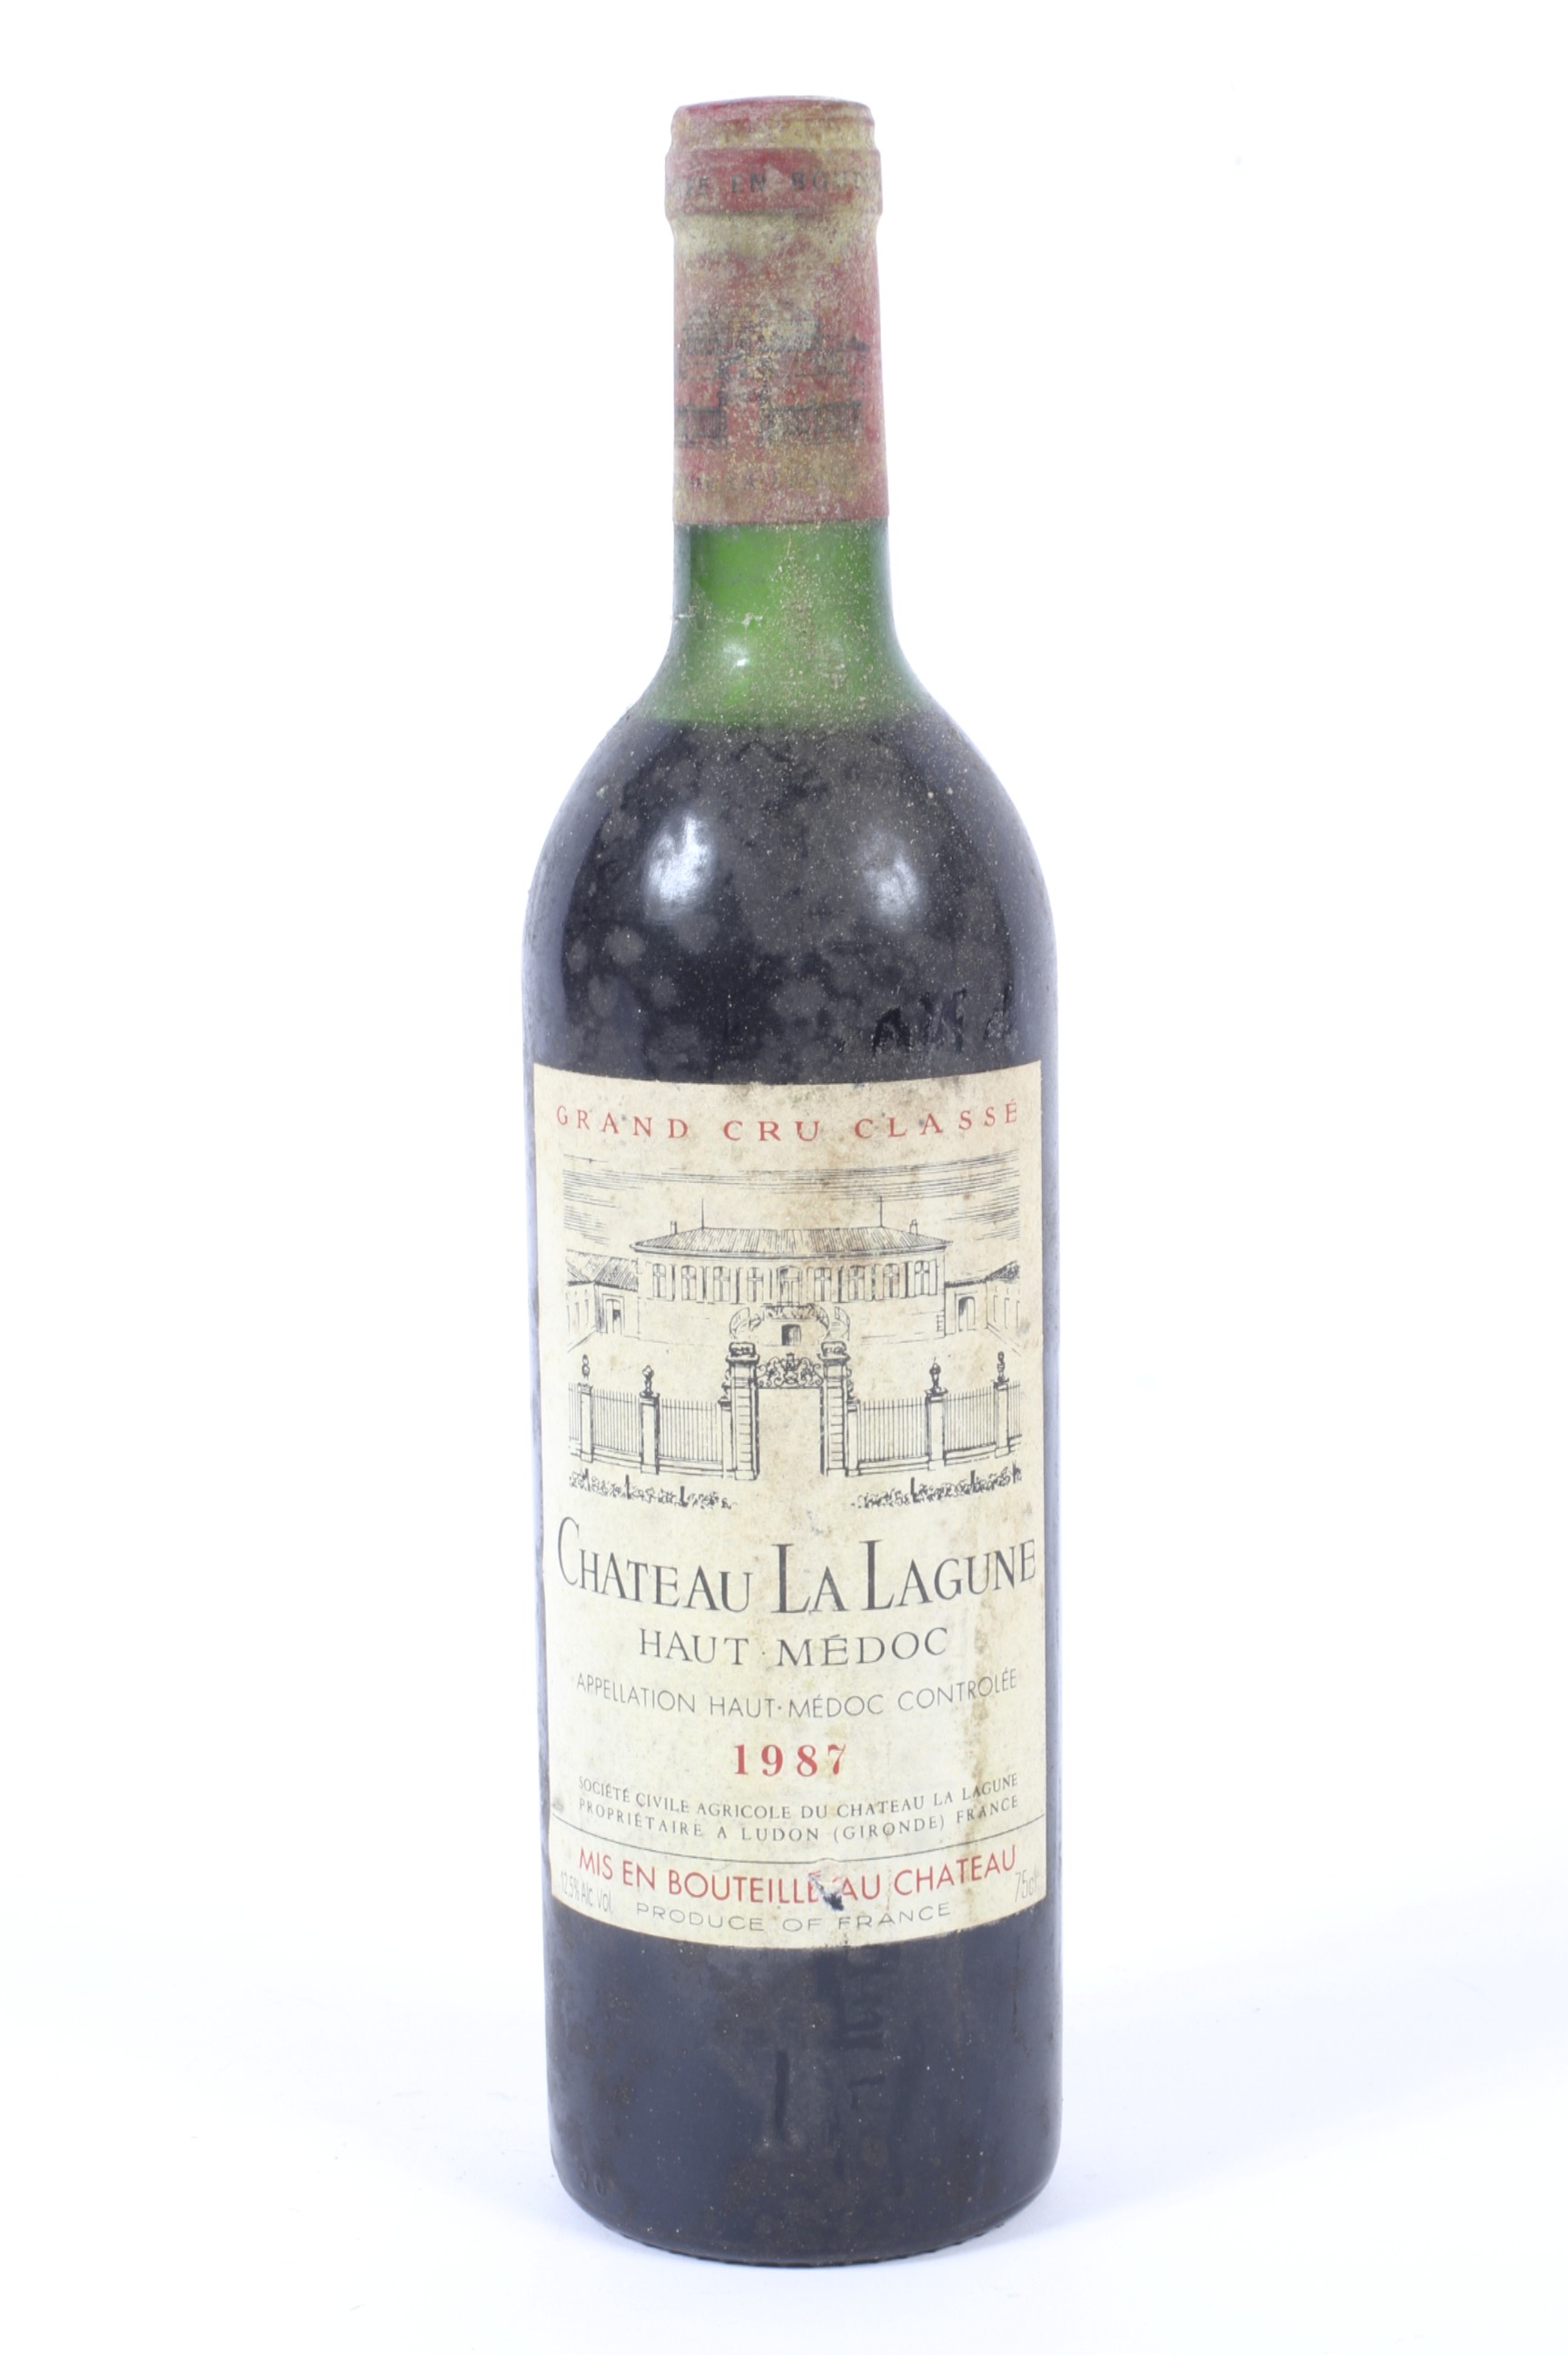 A bottle of Grand Cru Classe Chateau la Lagune Haut Medoc 1987. 75cl, 12.5% vol.